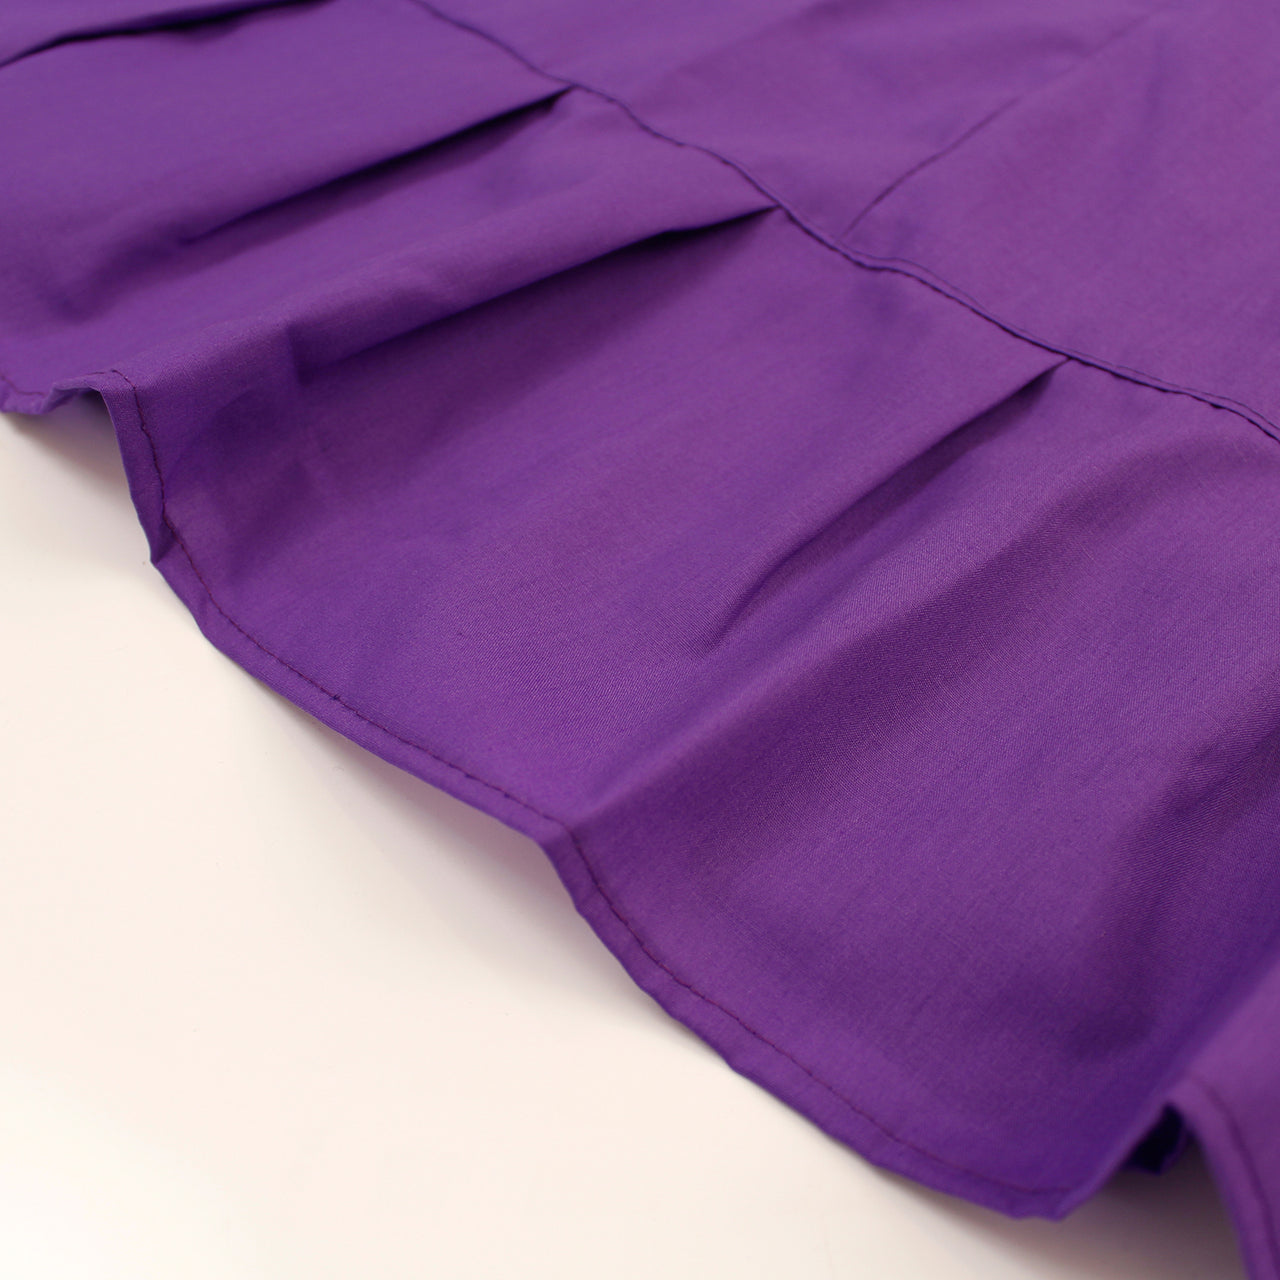 Purple - Sari (Saree) Petticoat - Available in S, M, L & XL - Underskirts For Sari's